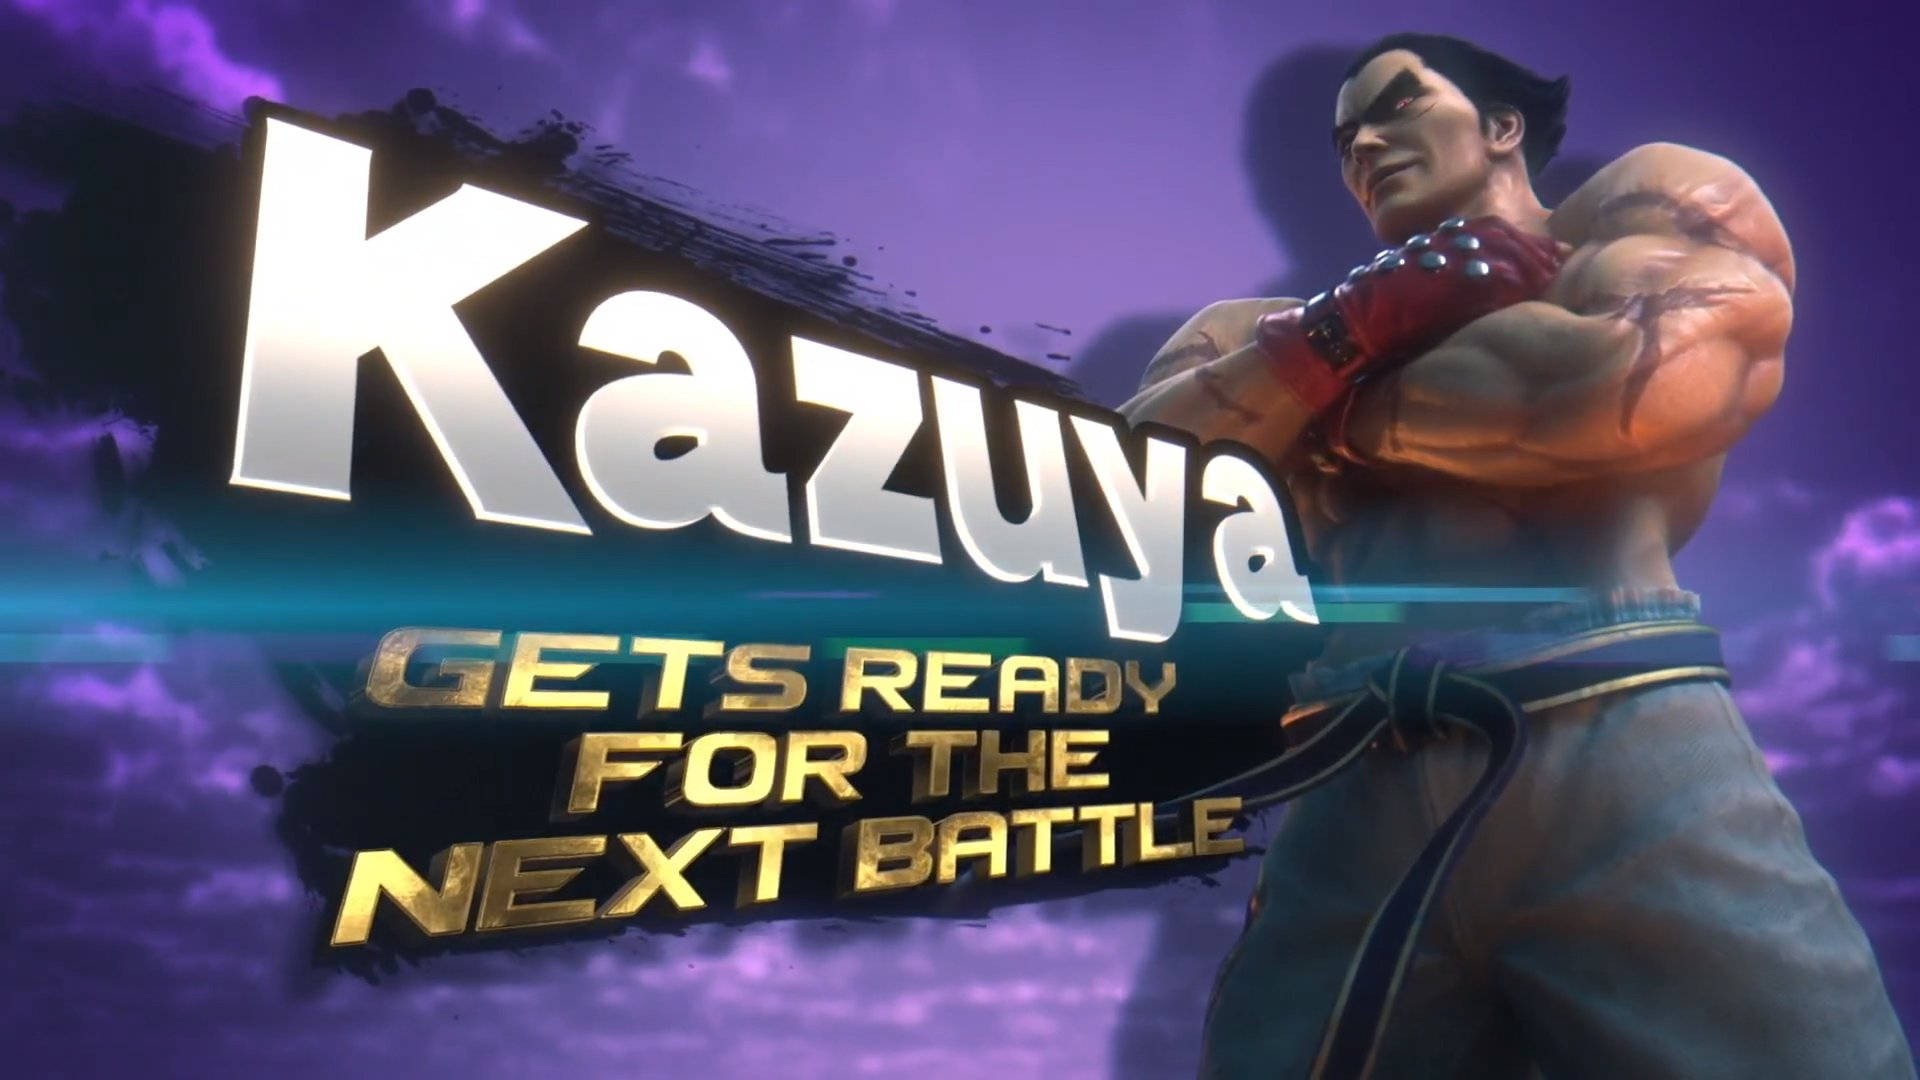 Kazuya Mishima Tekken Fighter Background